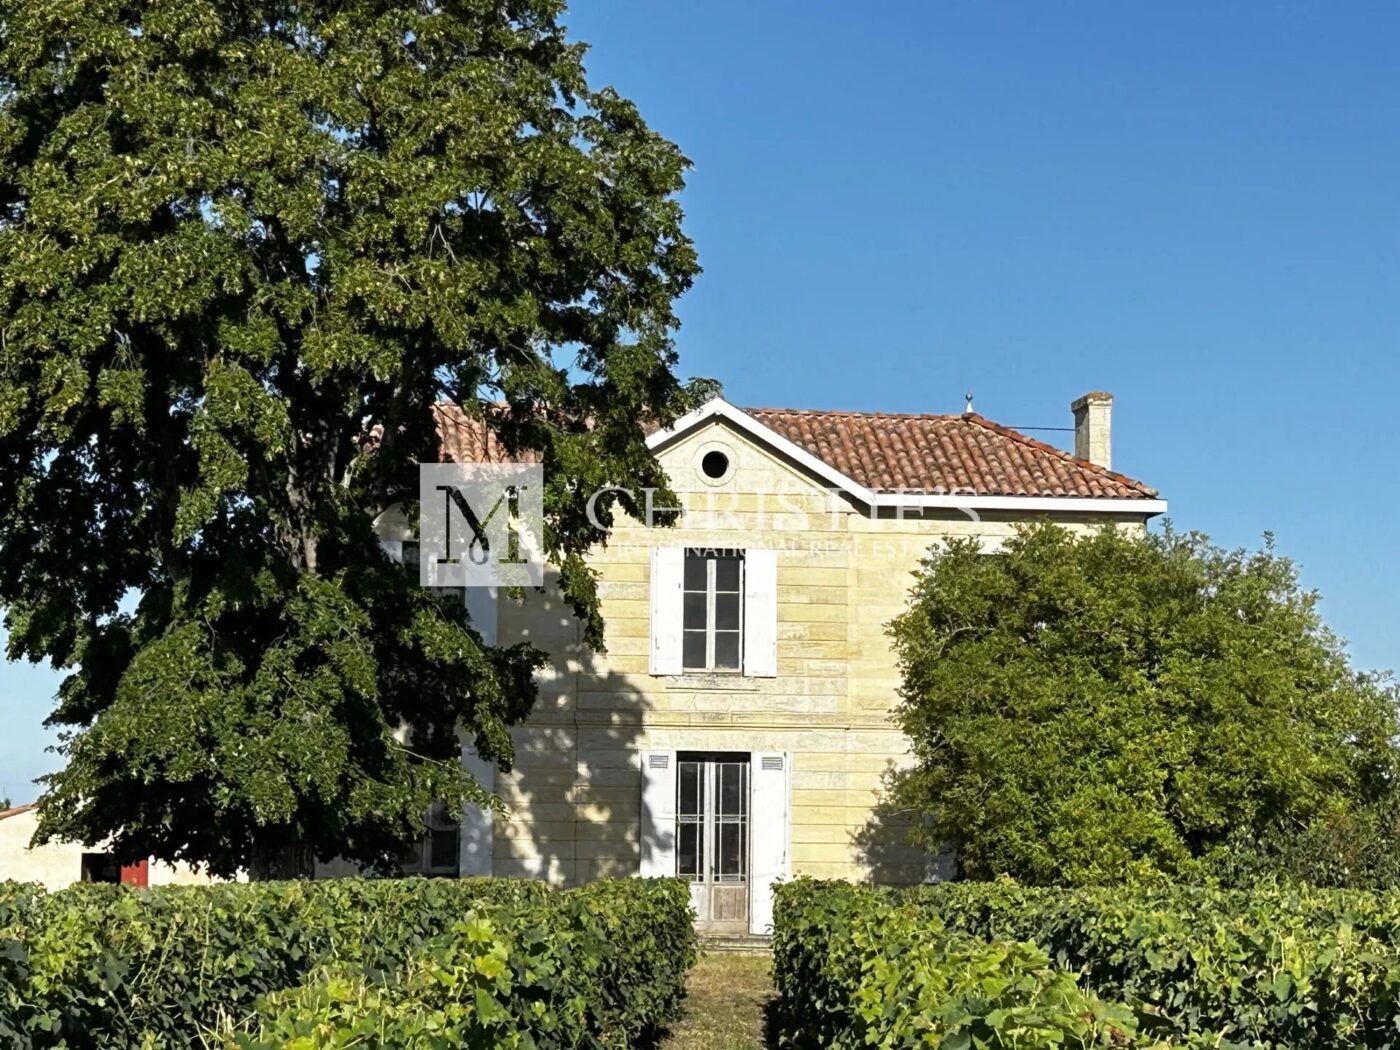 Exclusivity - for sale emblematic Bordeaux vineyard estate with exceptional terroir!